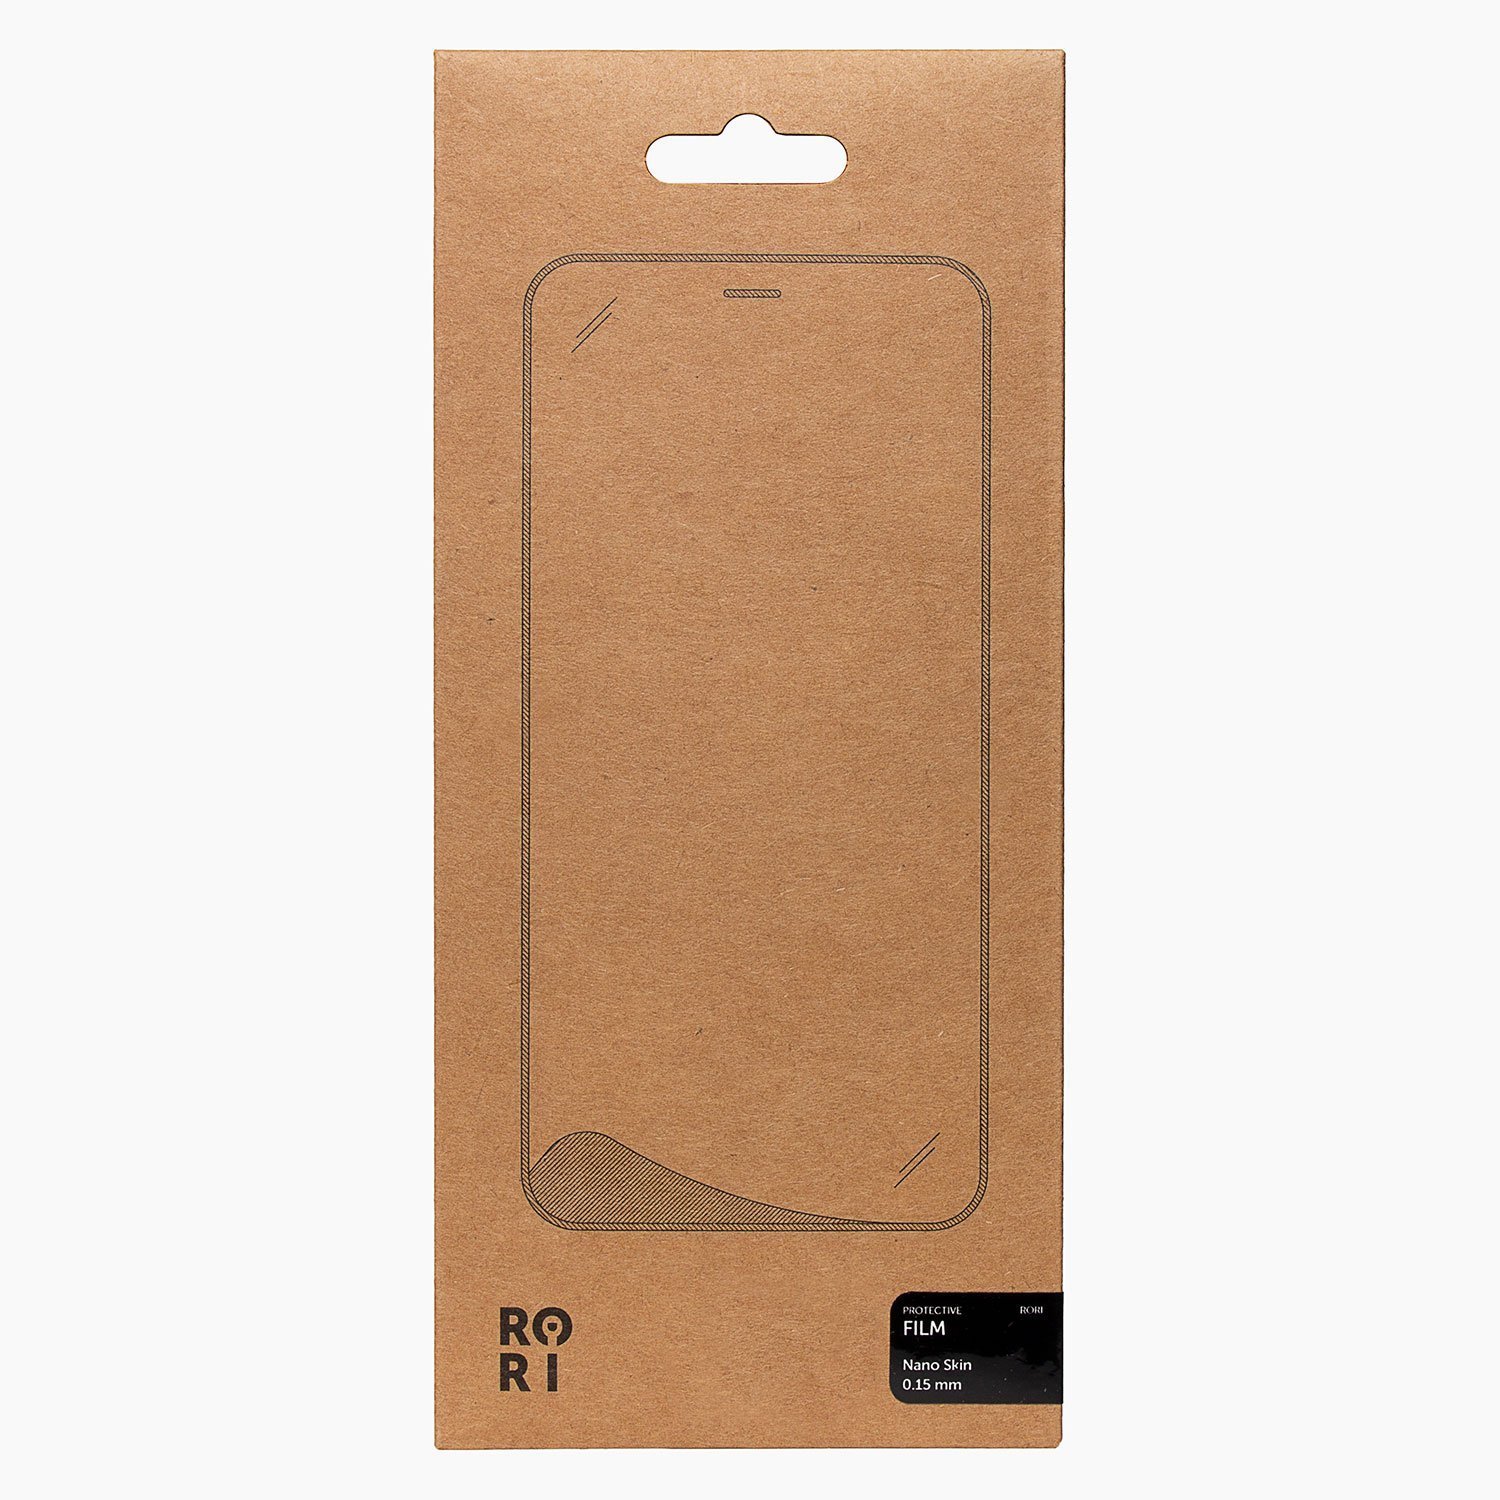 Защитная пленка Rori Polymer для экрана смартфона Xiaomi Mi Note 10/Mi Note 10 Pro, FullScreen, черная рамка (119540)